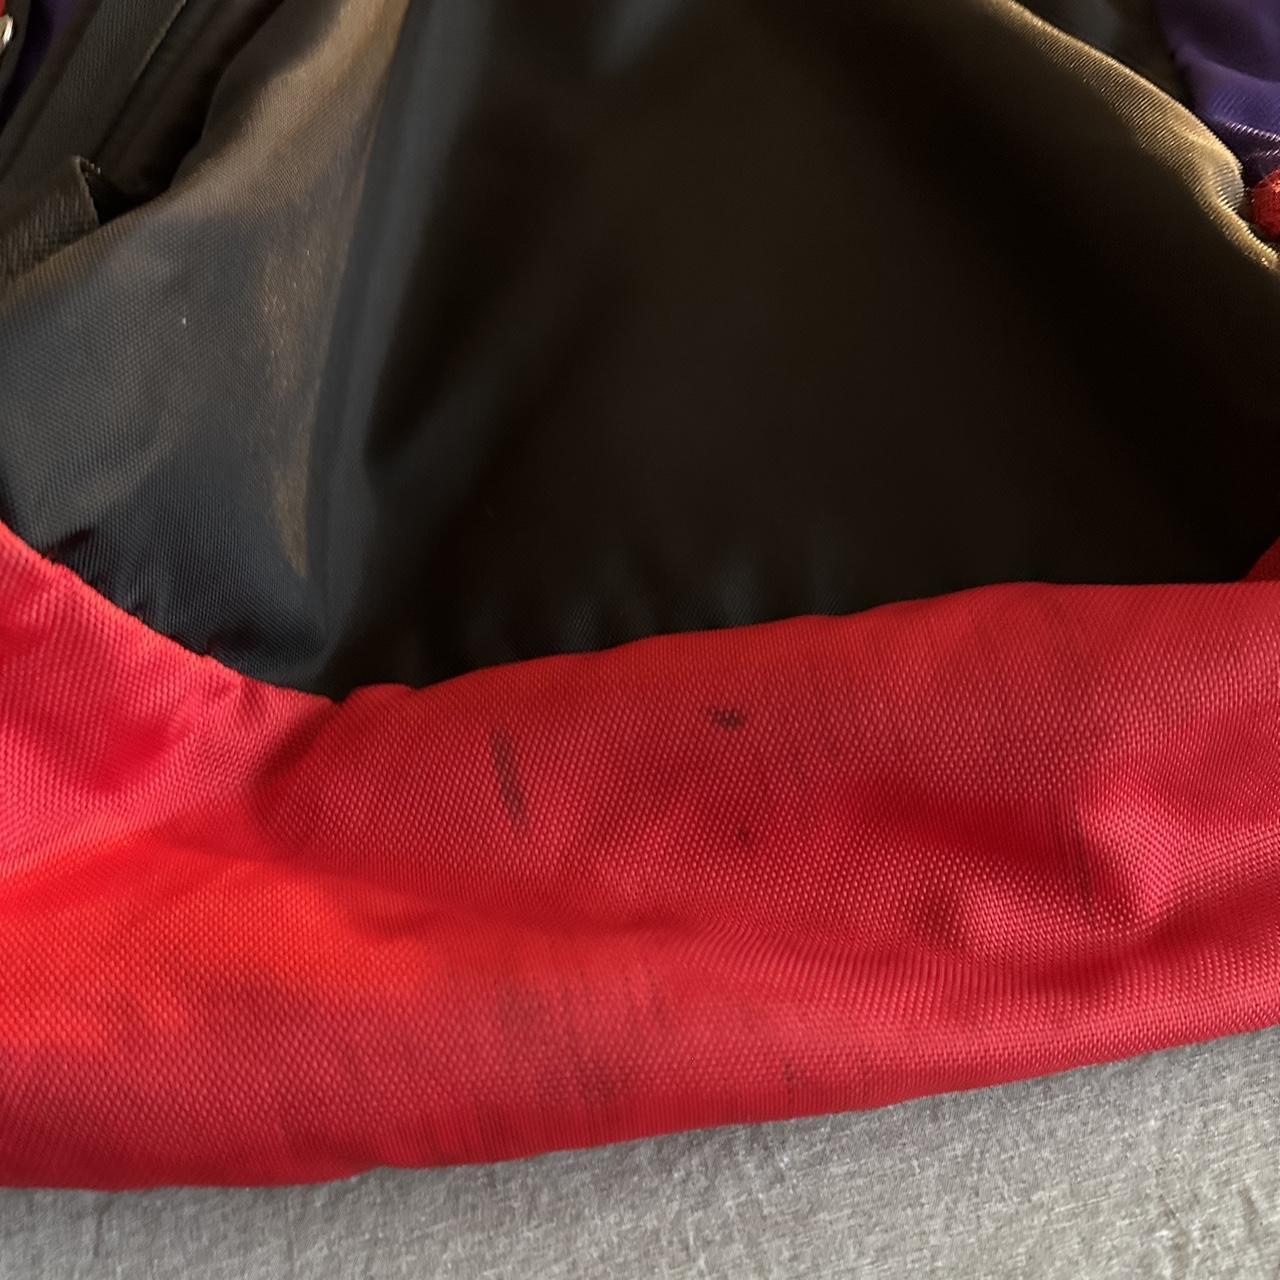 Eastpak Men's Red and Purple Bag (3)